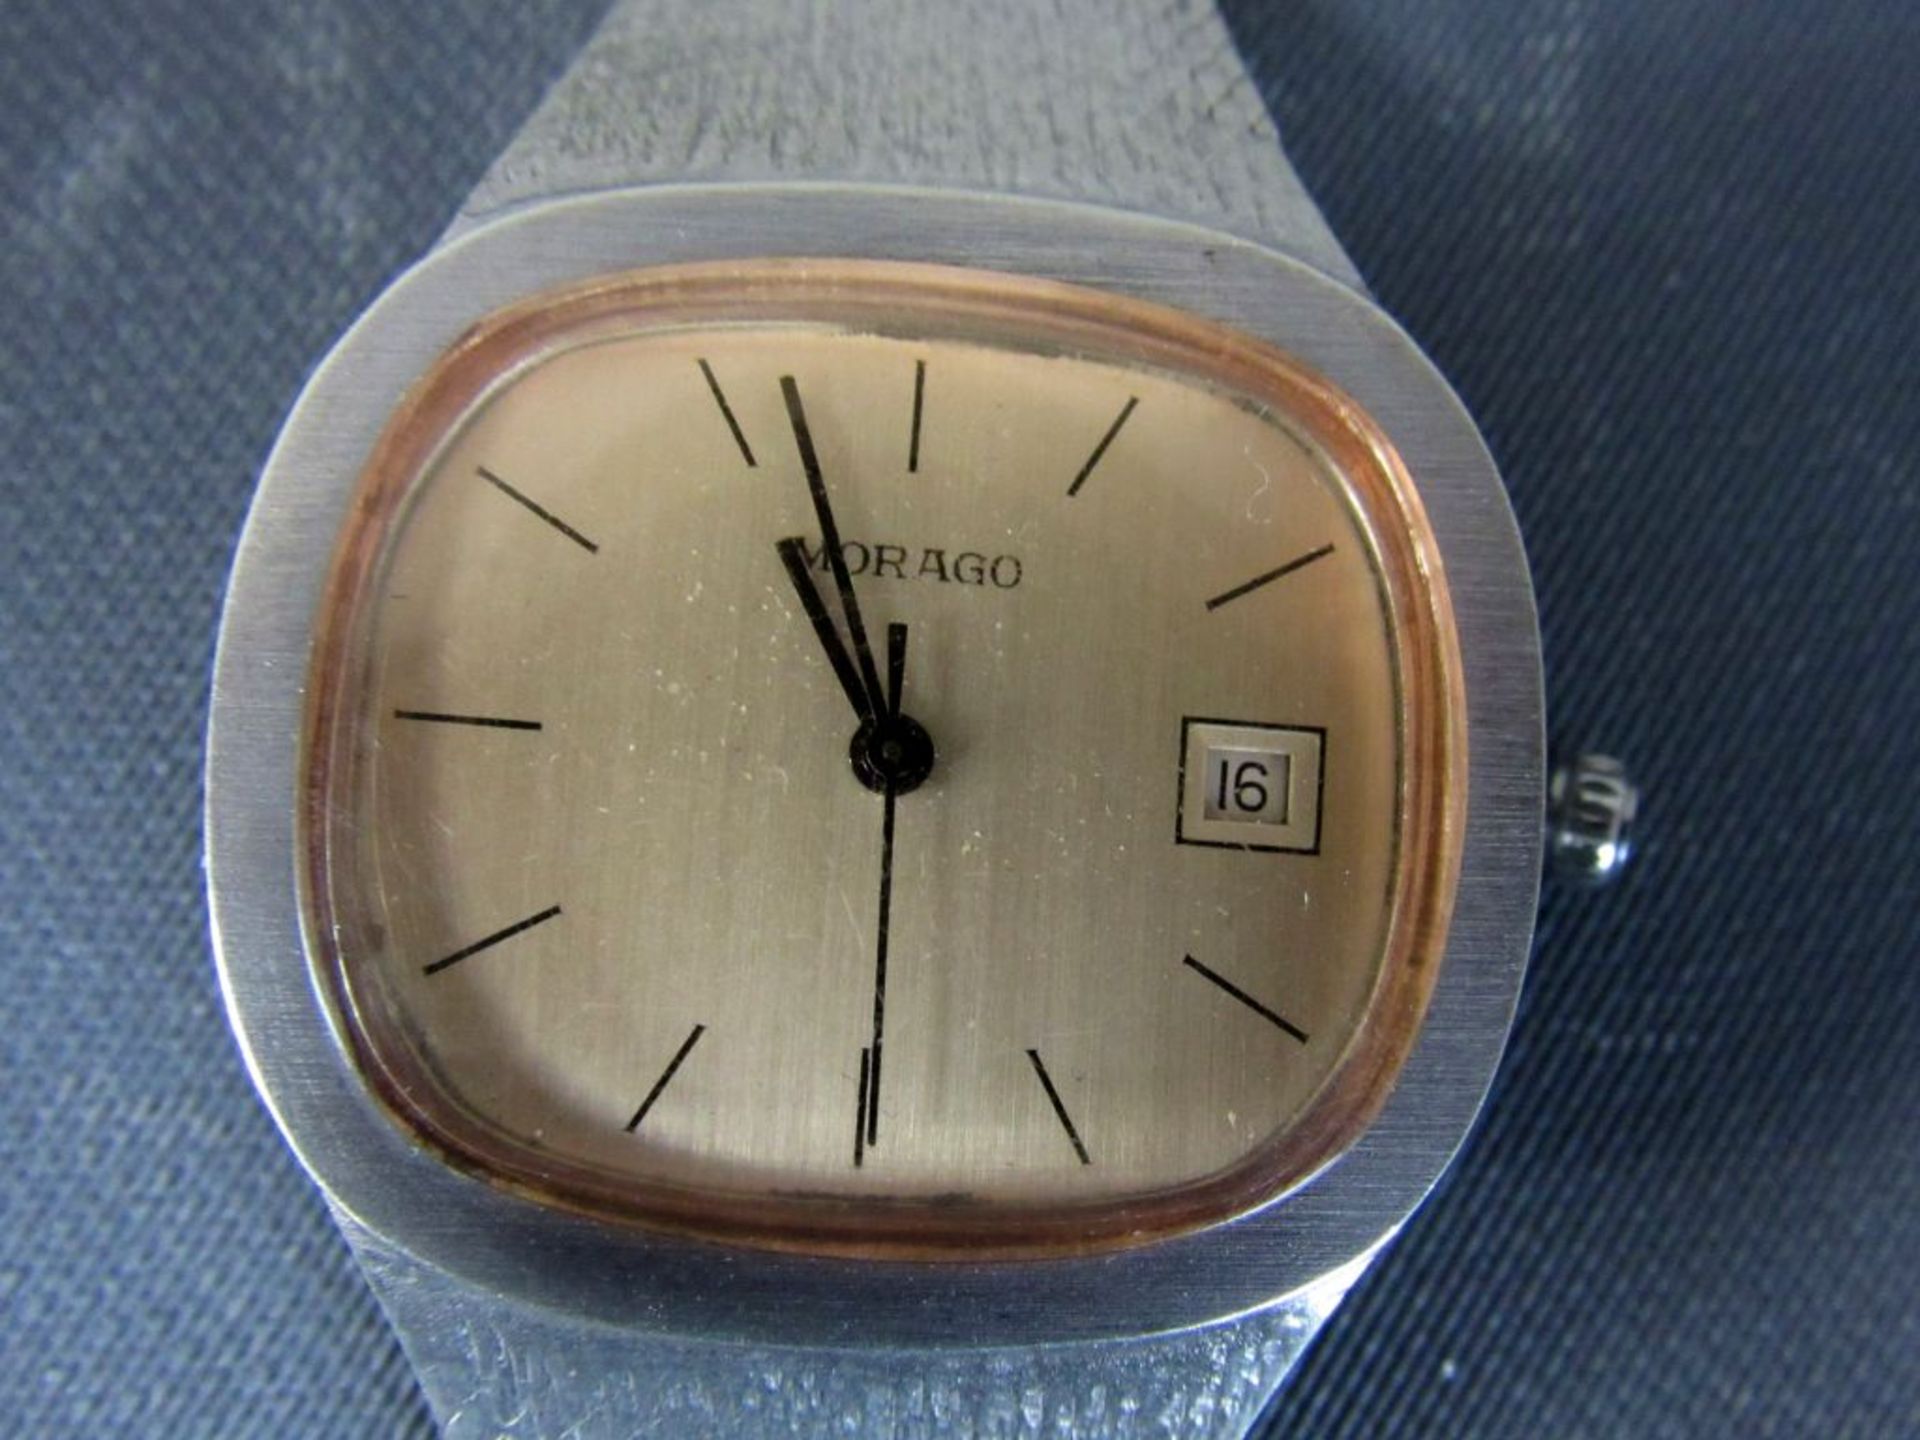 Damen Uhr 800er Silber Morago läuft an - Image 2 of 10